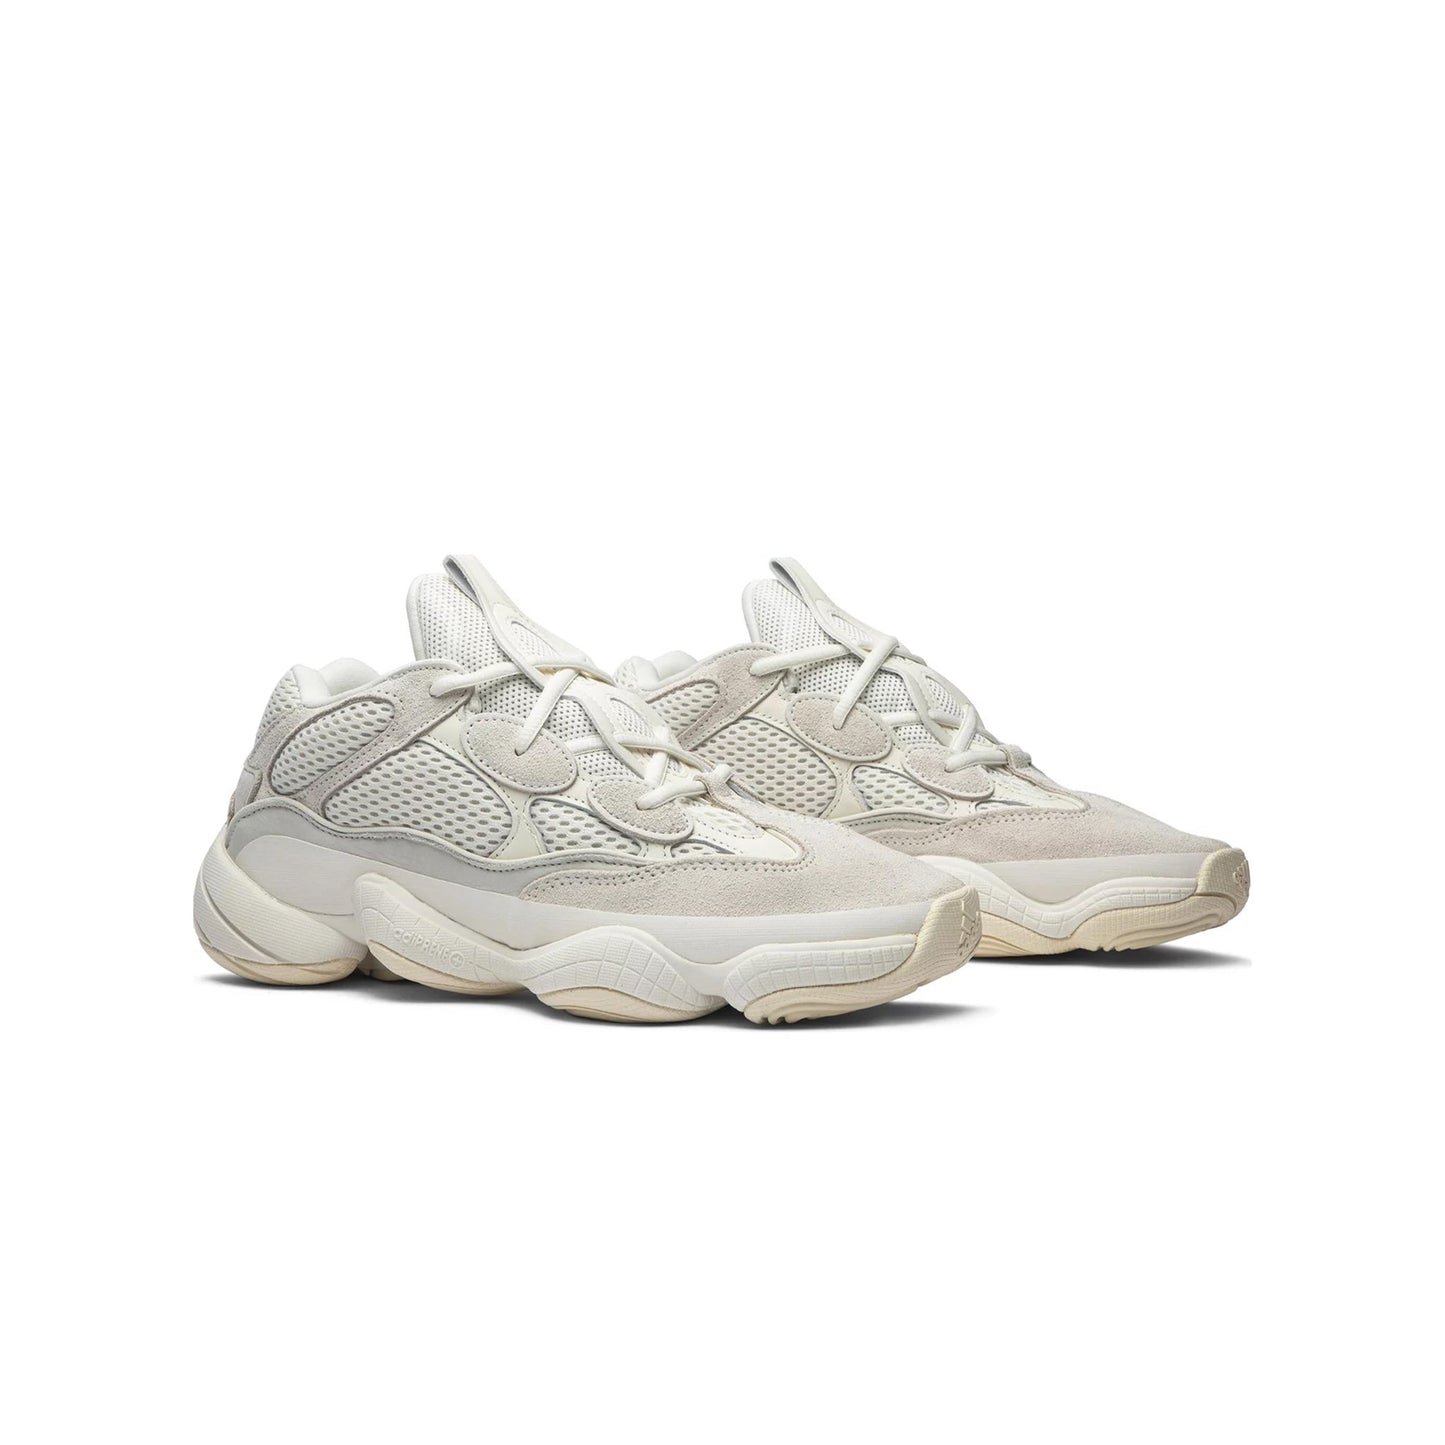 adidas Yeezy 500 Bone White (Restock Release)